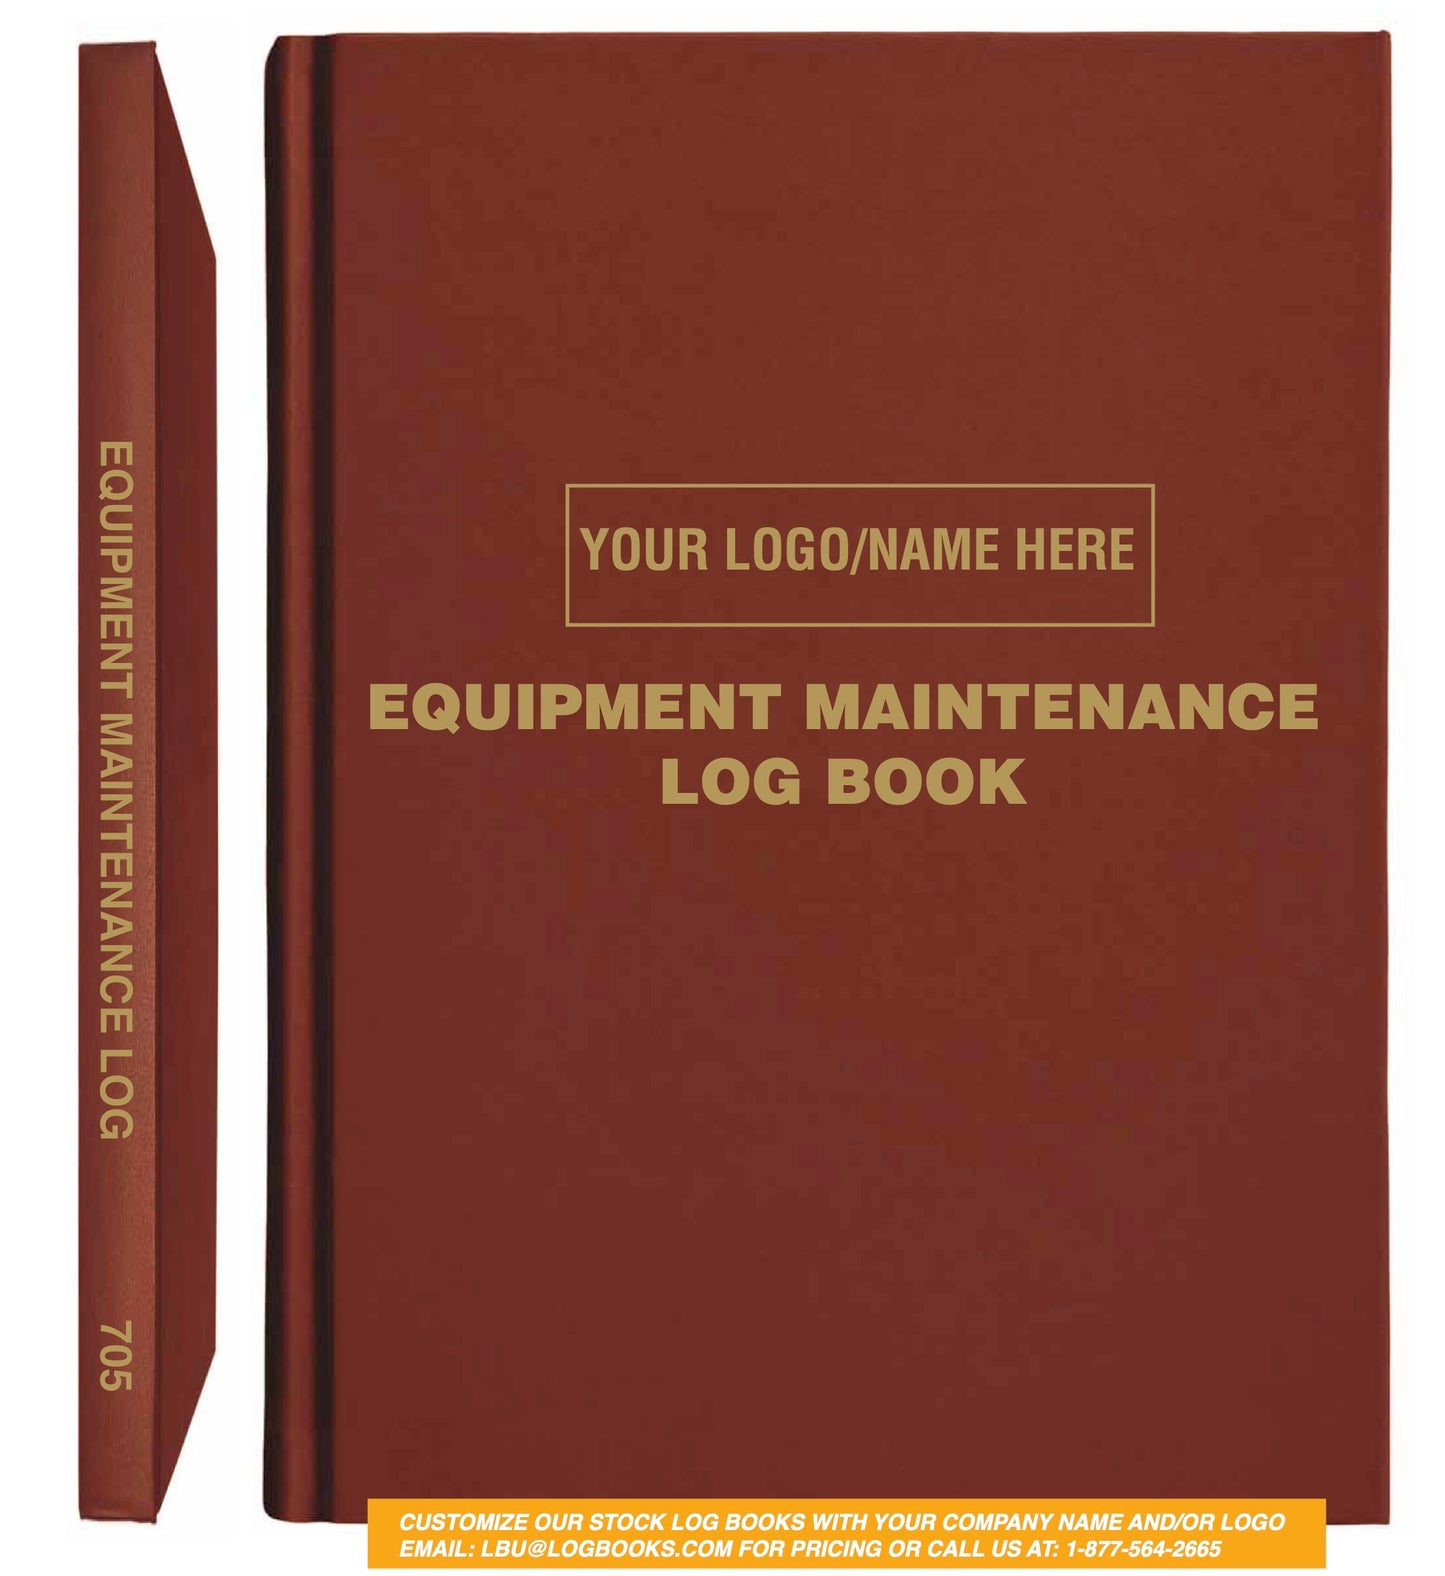 Equipment Maintenance Log Book #705